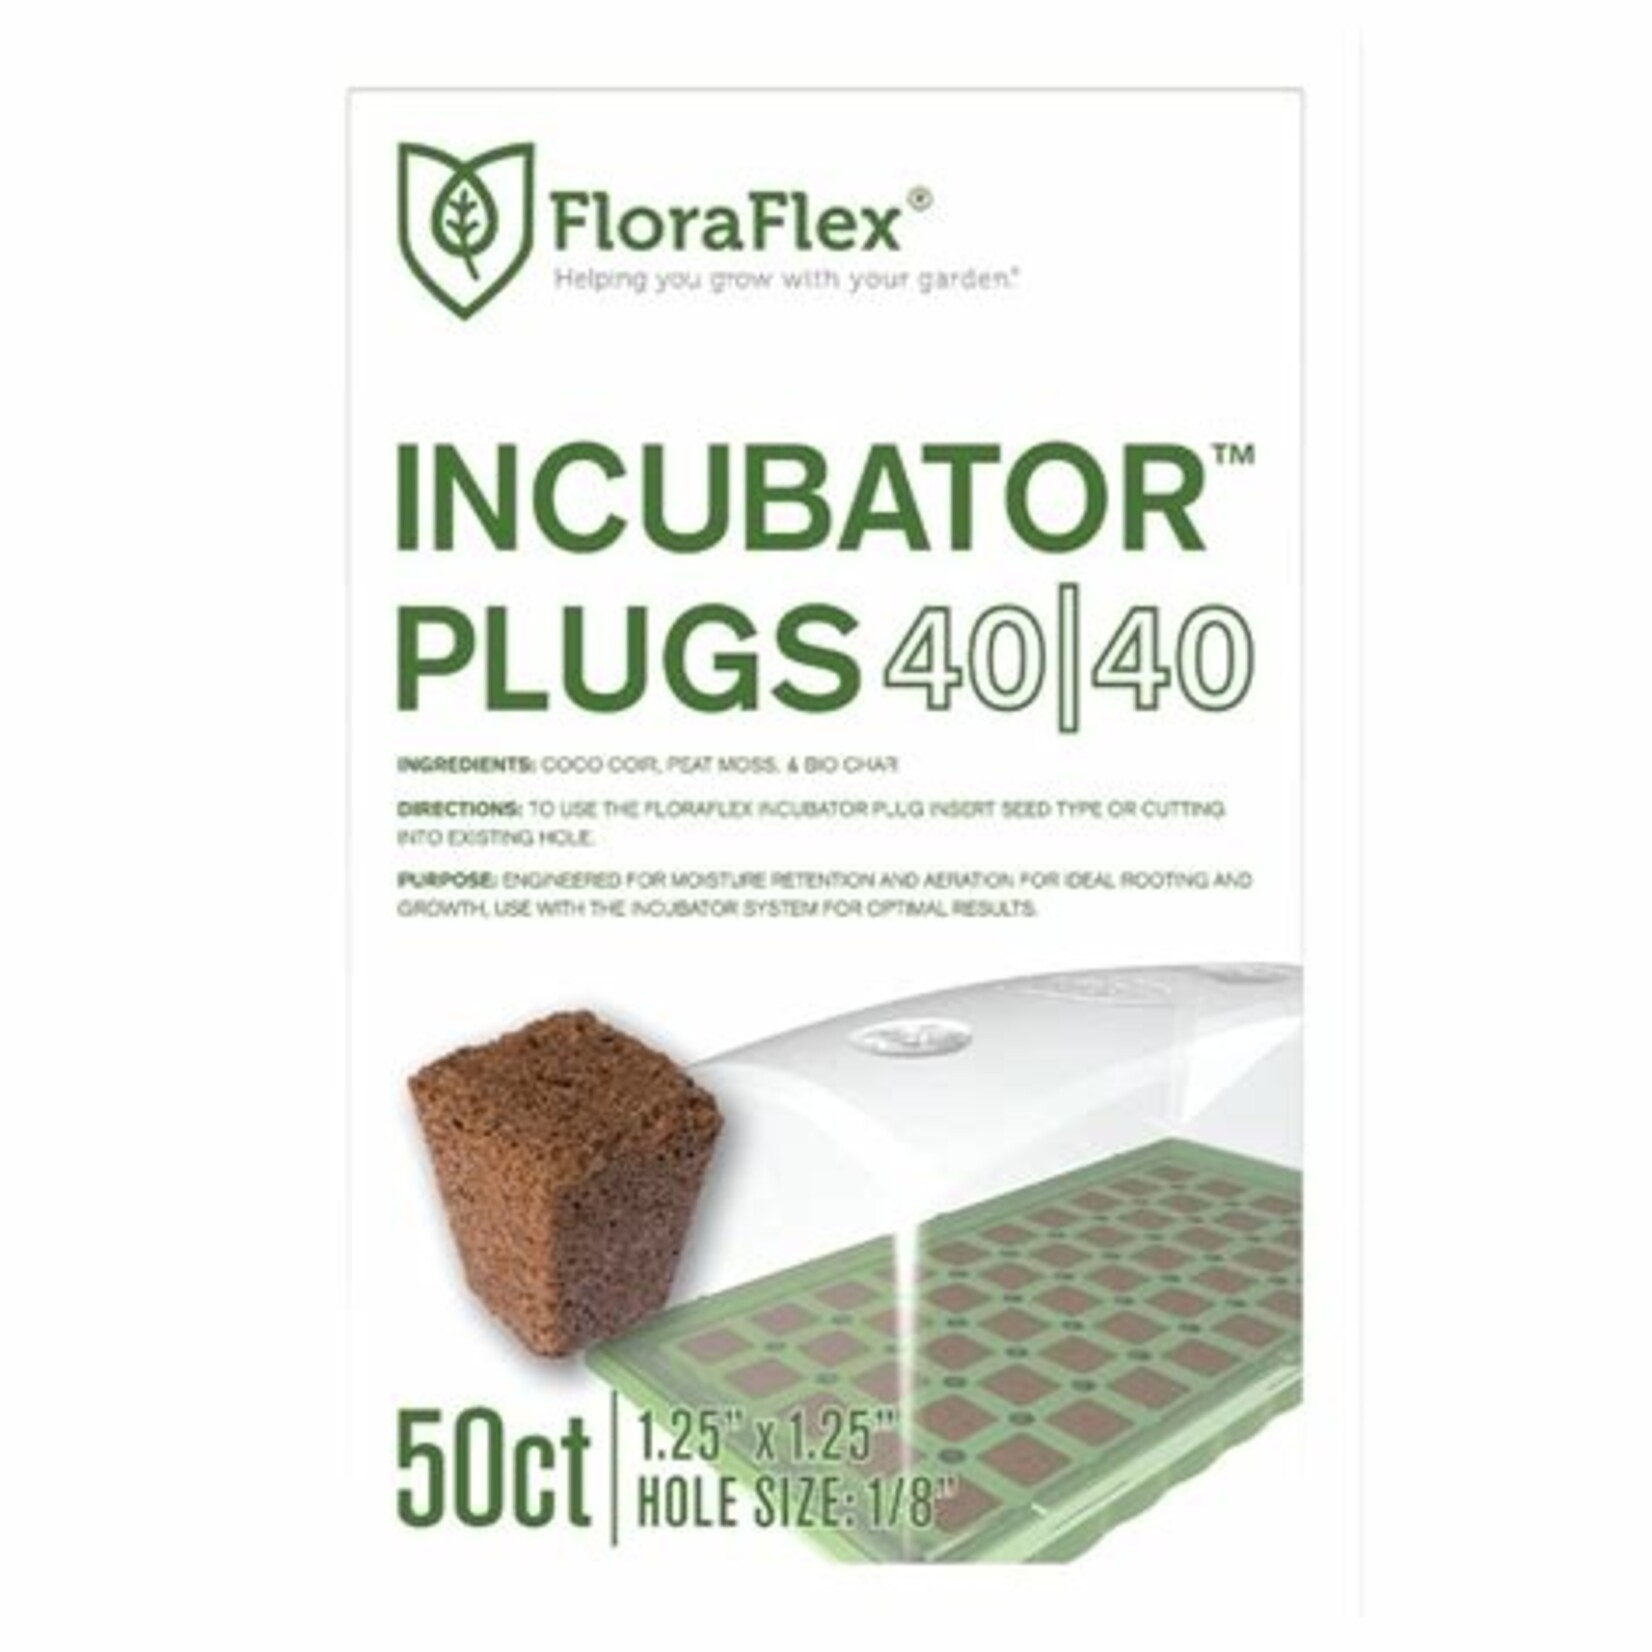 Floraflex FloraFlex Incubator - 40|40 Coco Plugs, pack of 50